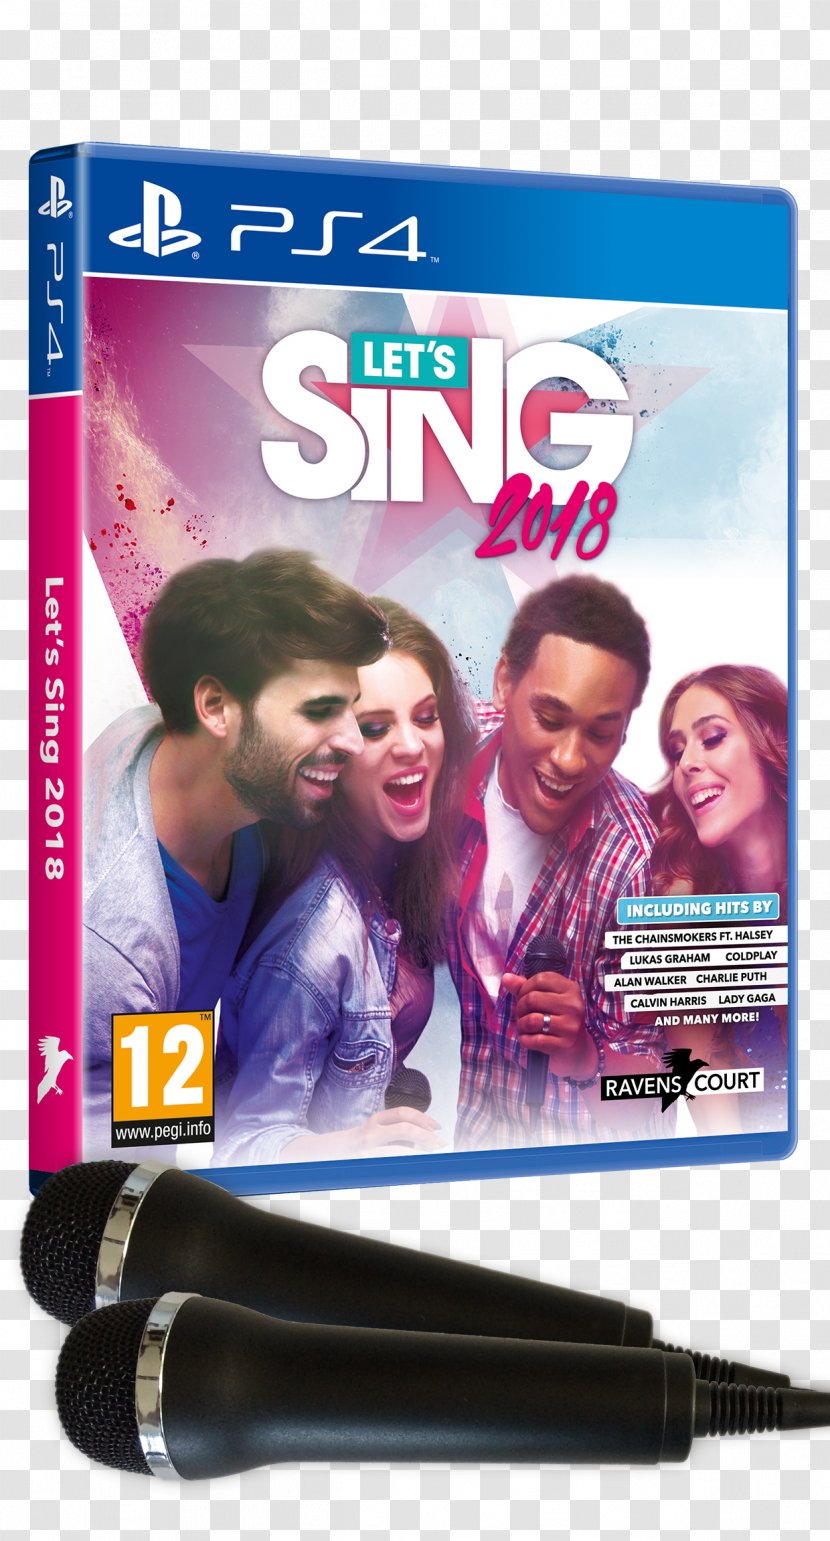 Let's Sing Microphone We Pop! PlayStation 4 Video Game - Display Advertising Transparent PNG